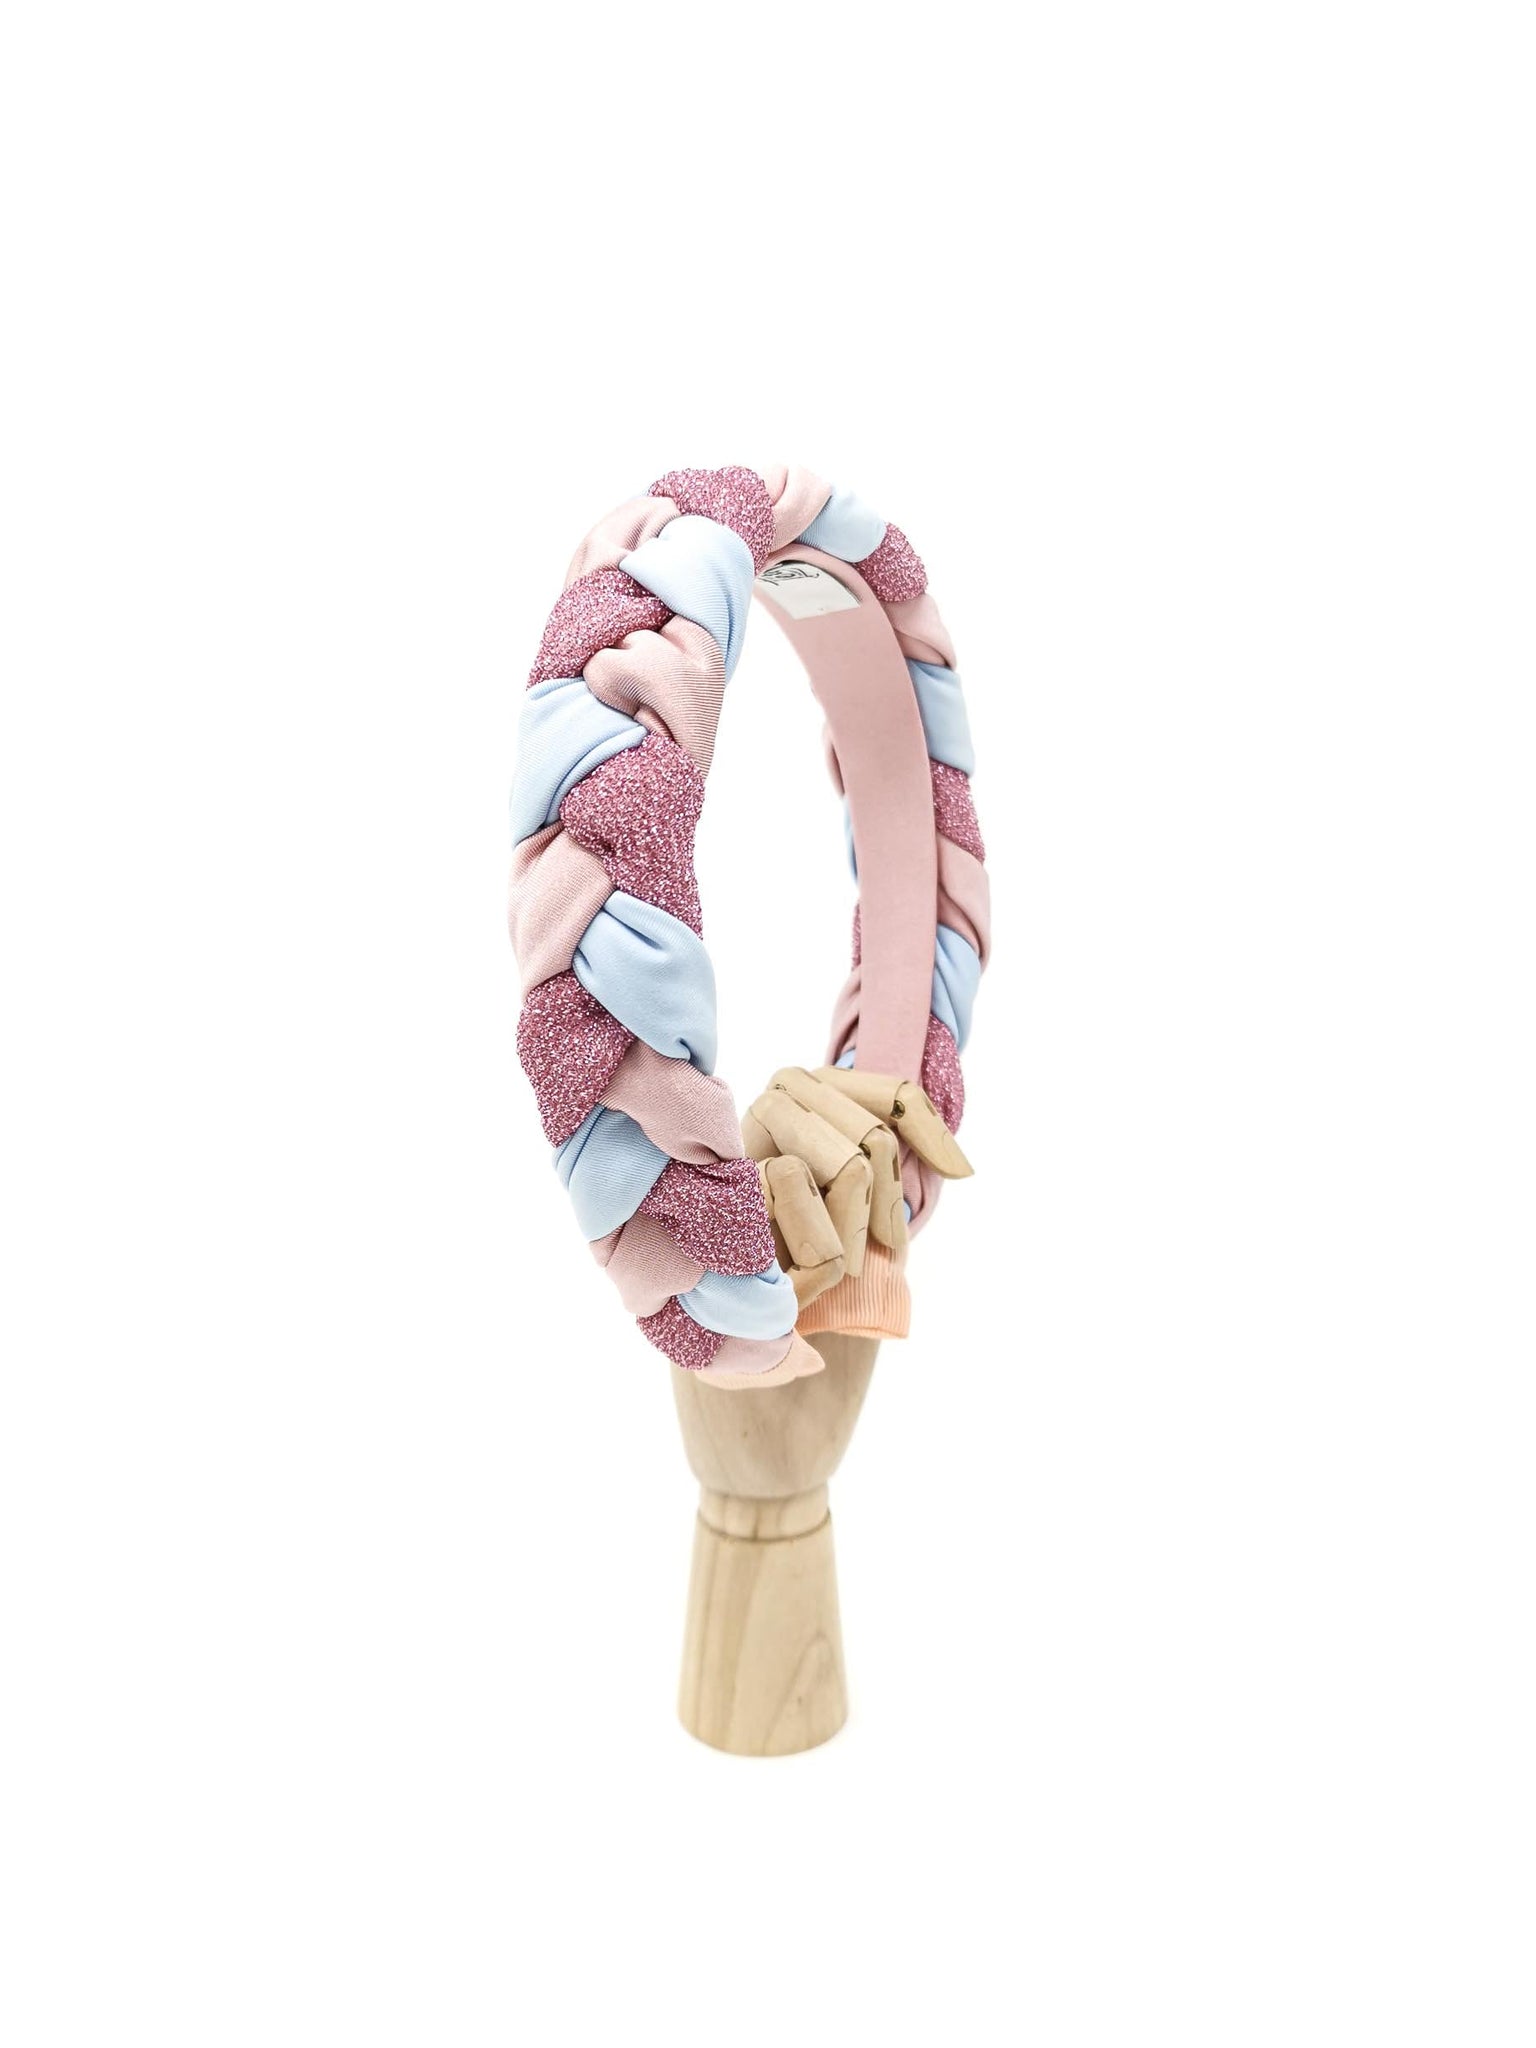 "Frida" pink powder and light blue jersey and lurex braided hairband